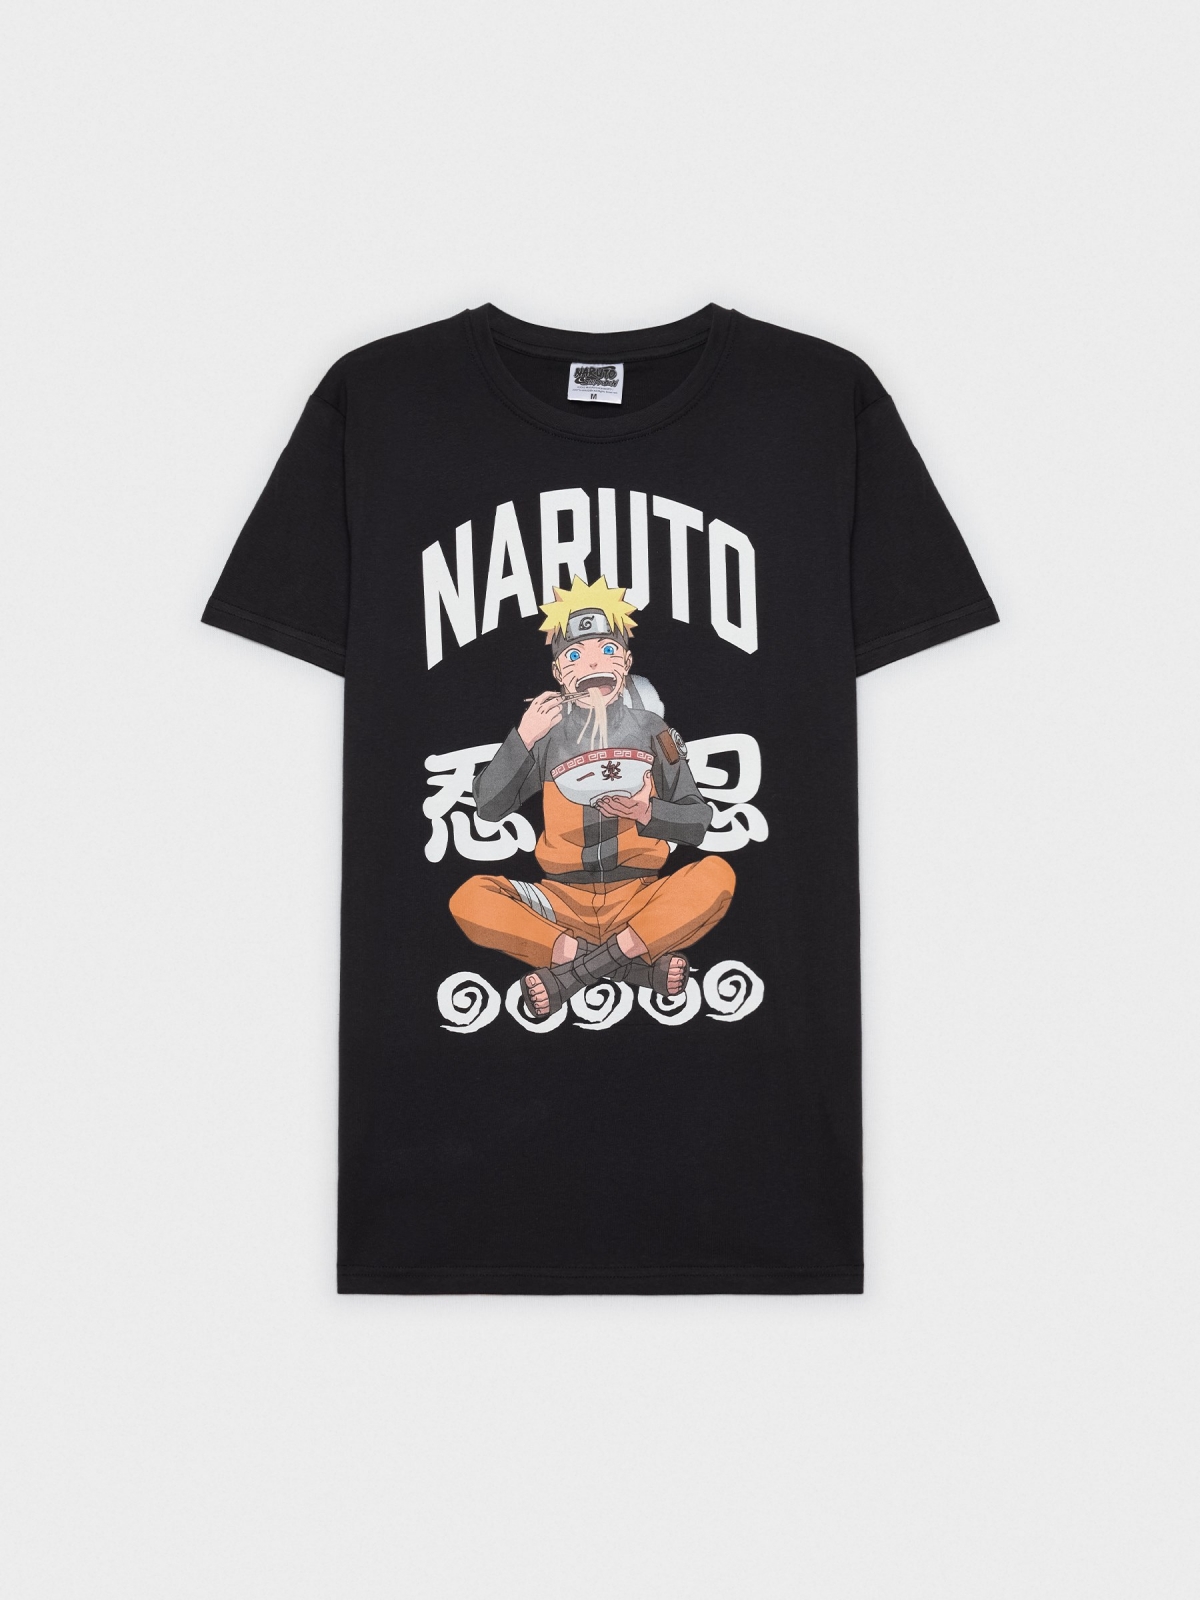  Black T-shirt Naruto black